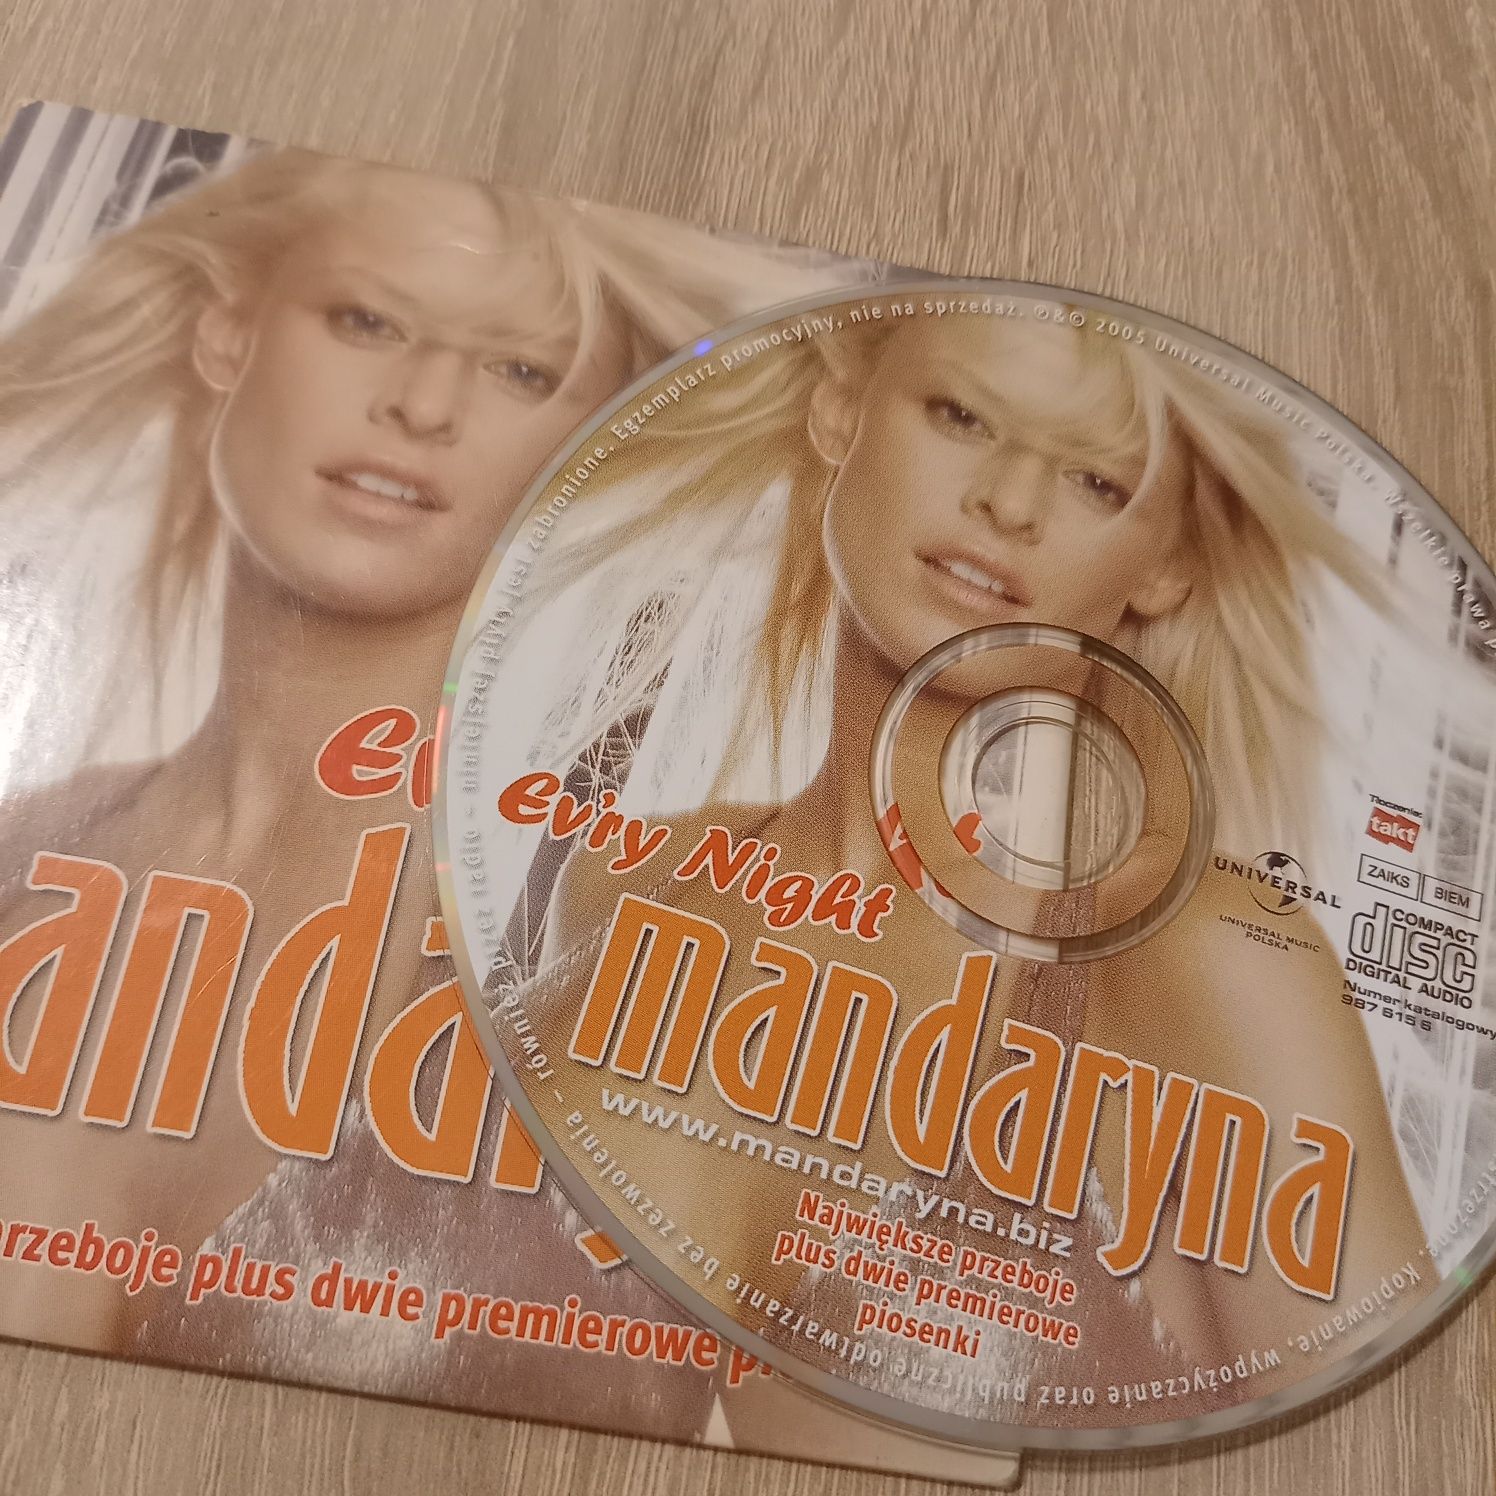 Płyta CD Mandaryna Evry Night